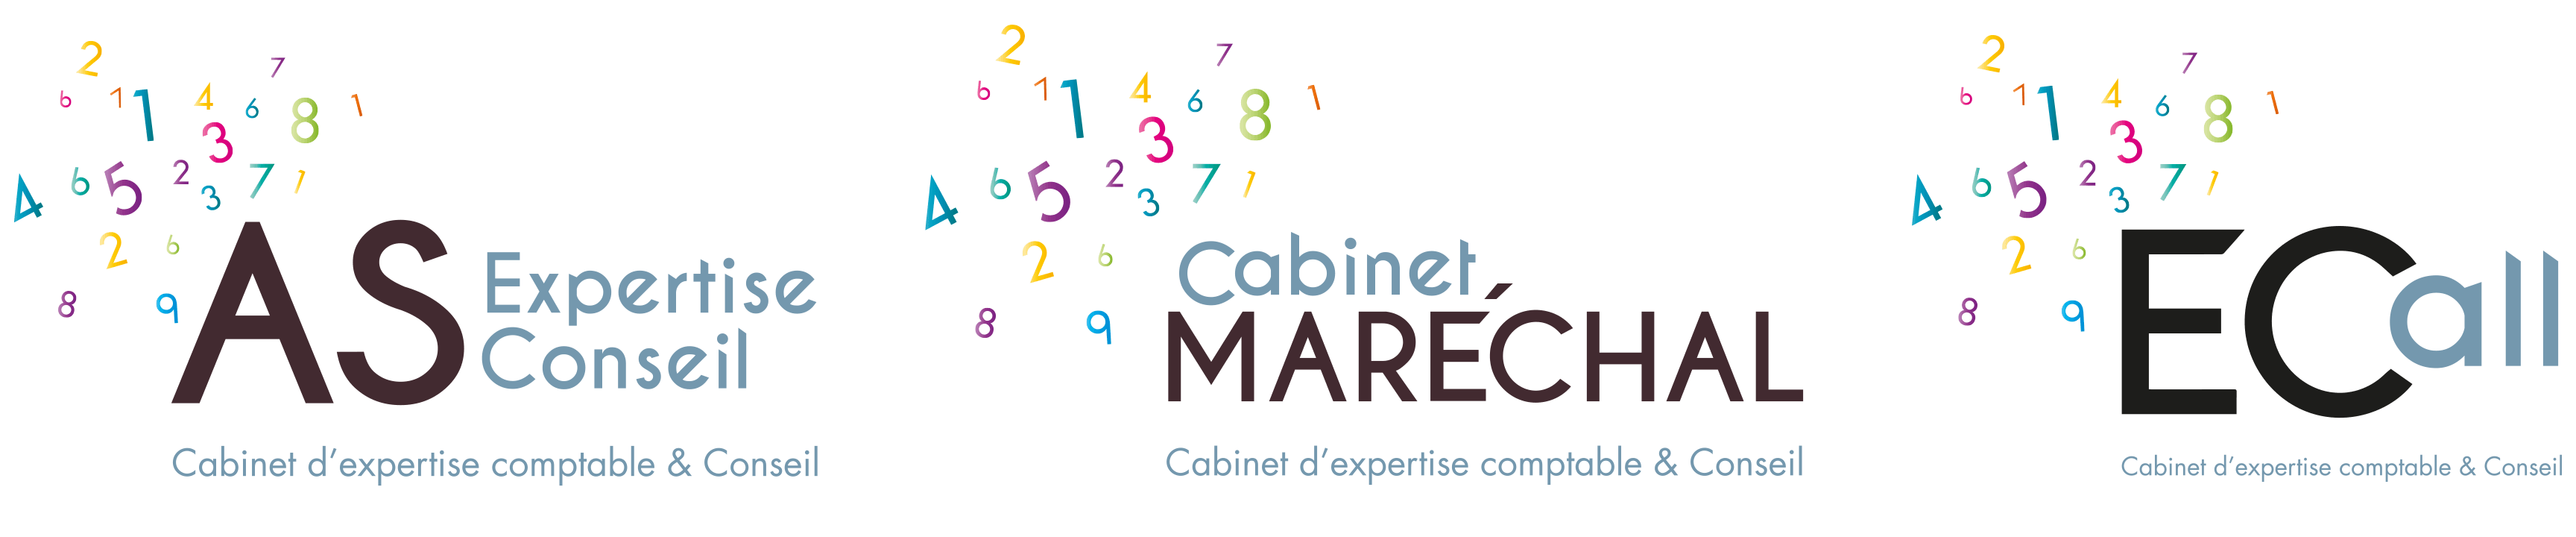 Cabinet Maréchal